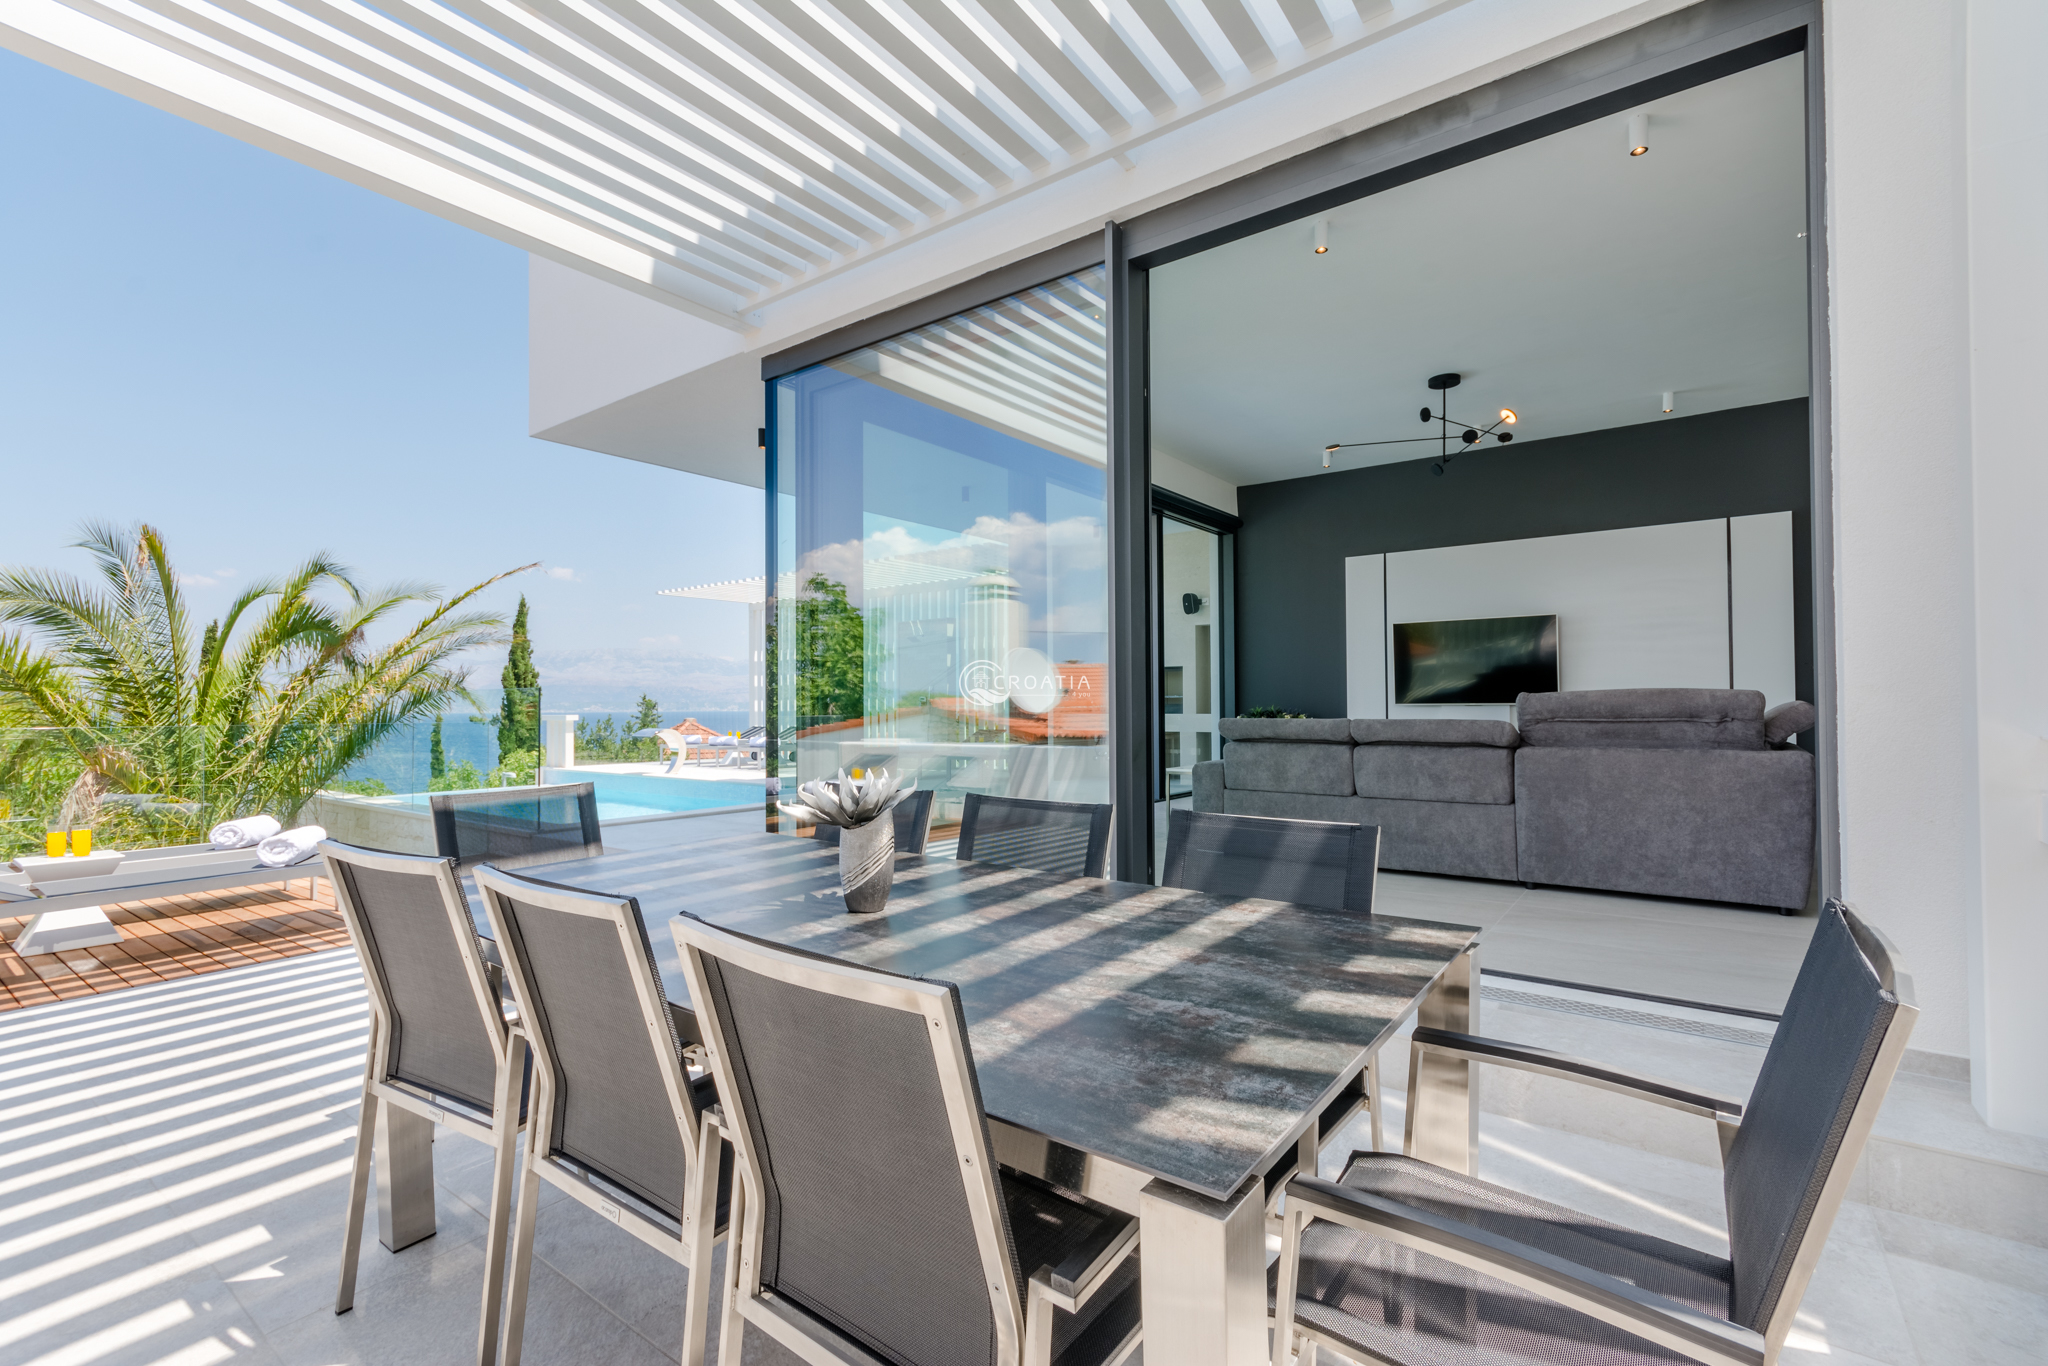 Newly built luxury villa P in Sutivan on island Brač